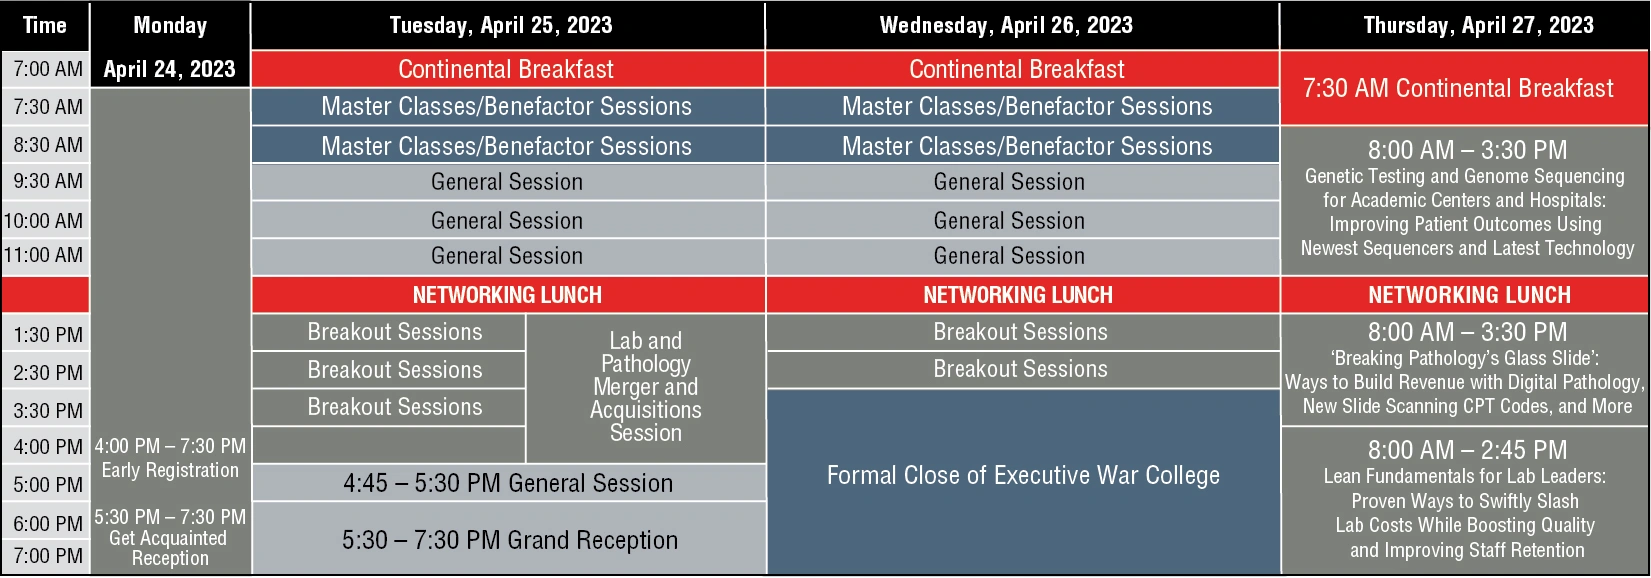 Executive War College 2023 Schedule